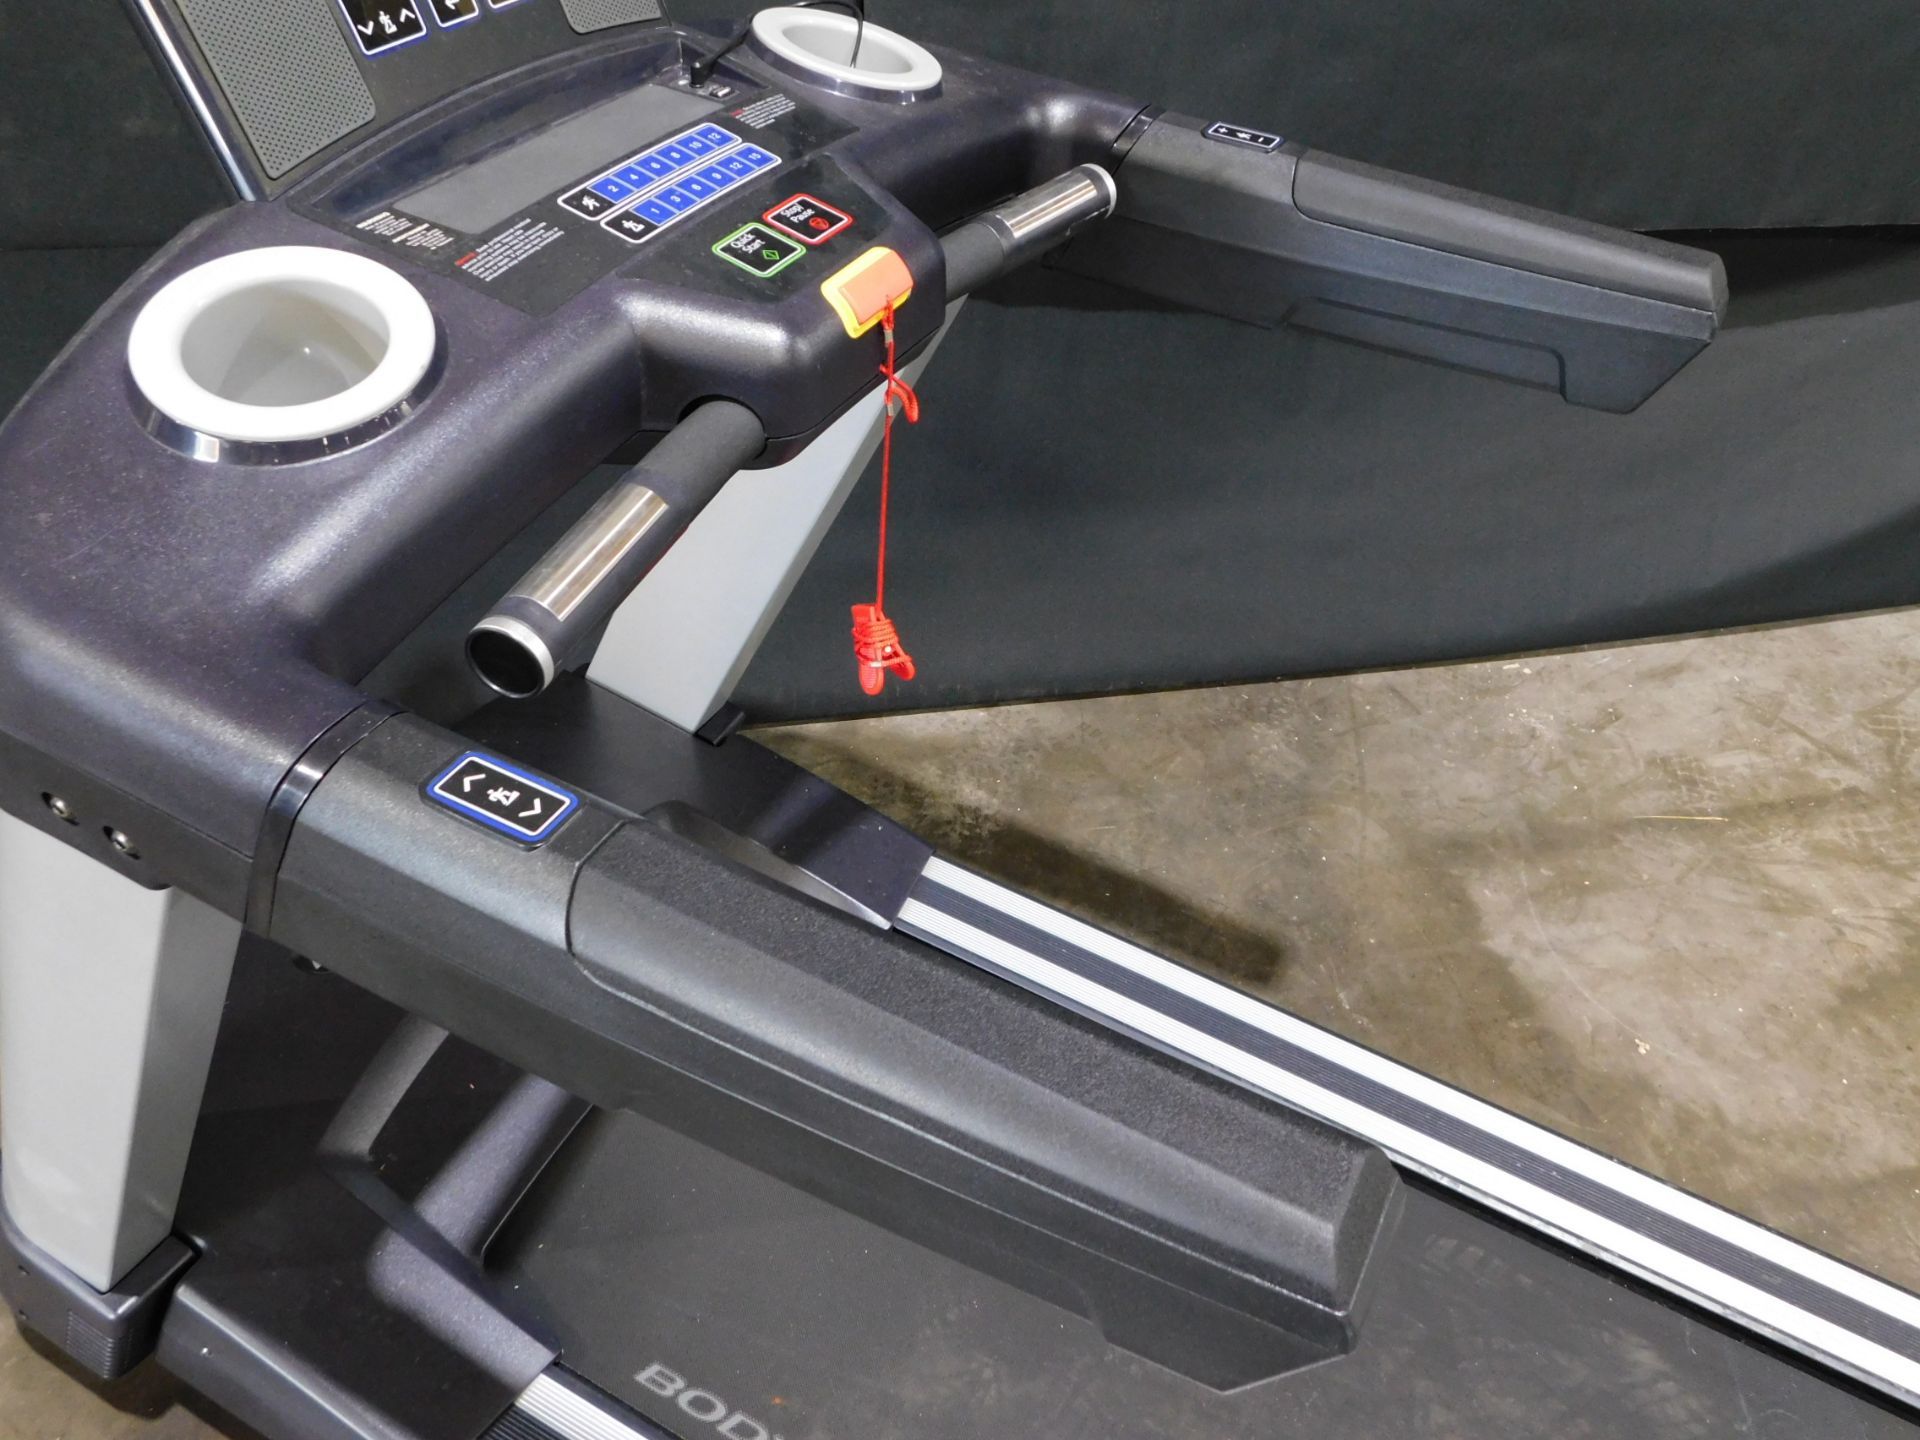 Bodycraft T1000 Treadmill-Demonstrator Unit - Image 5 of 17